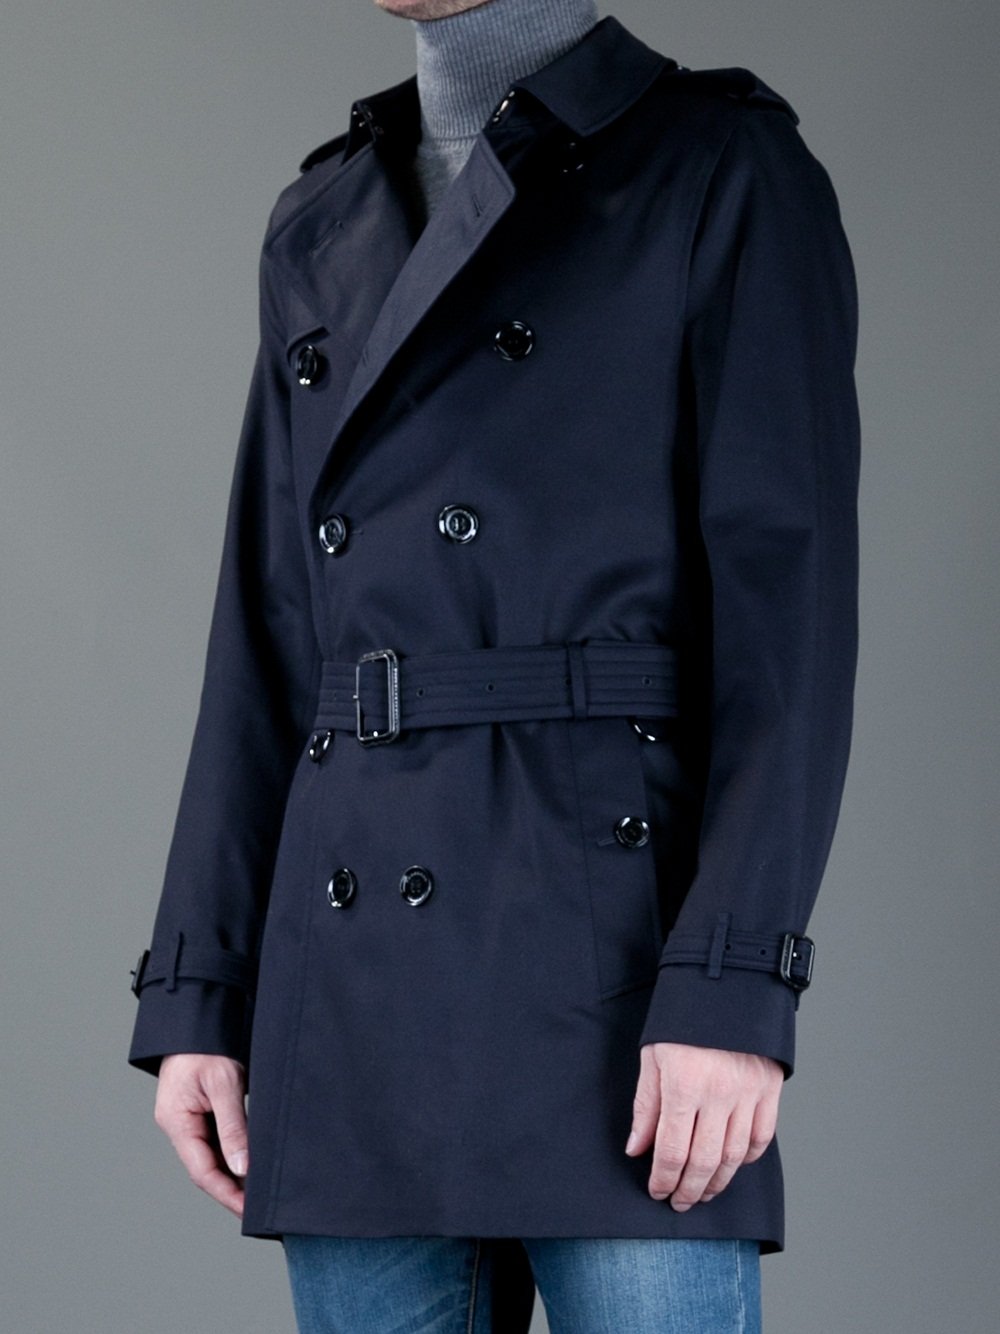 burberry britton trench coat